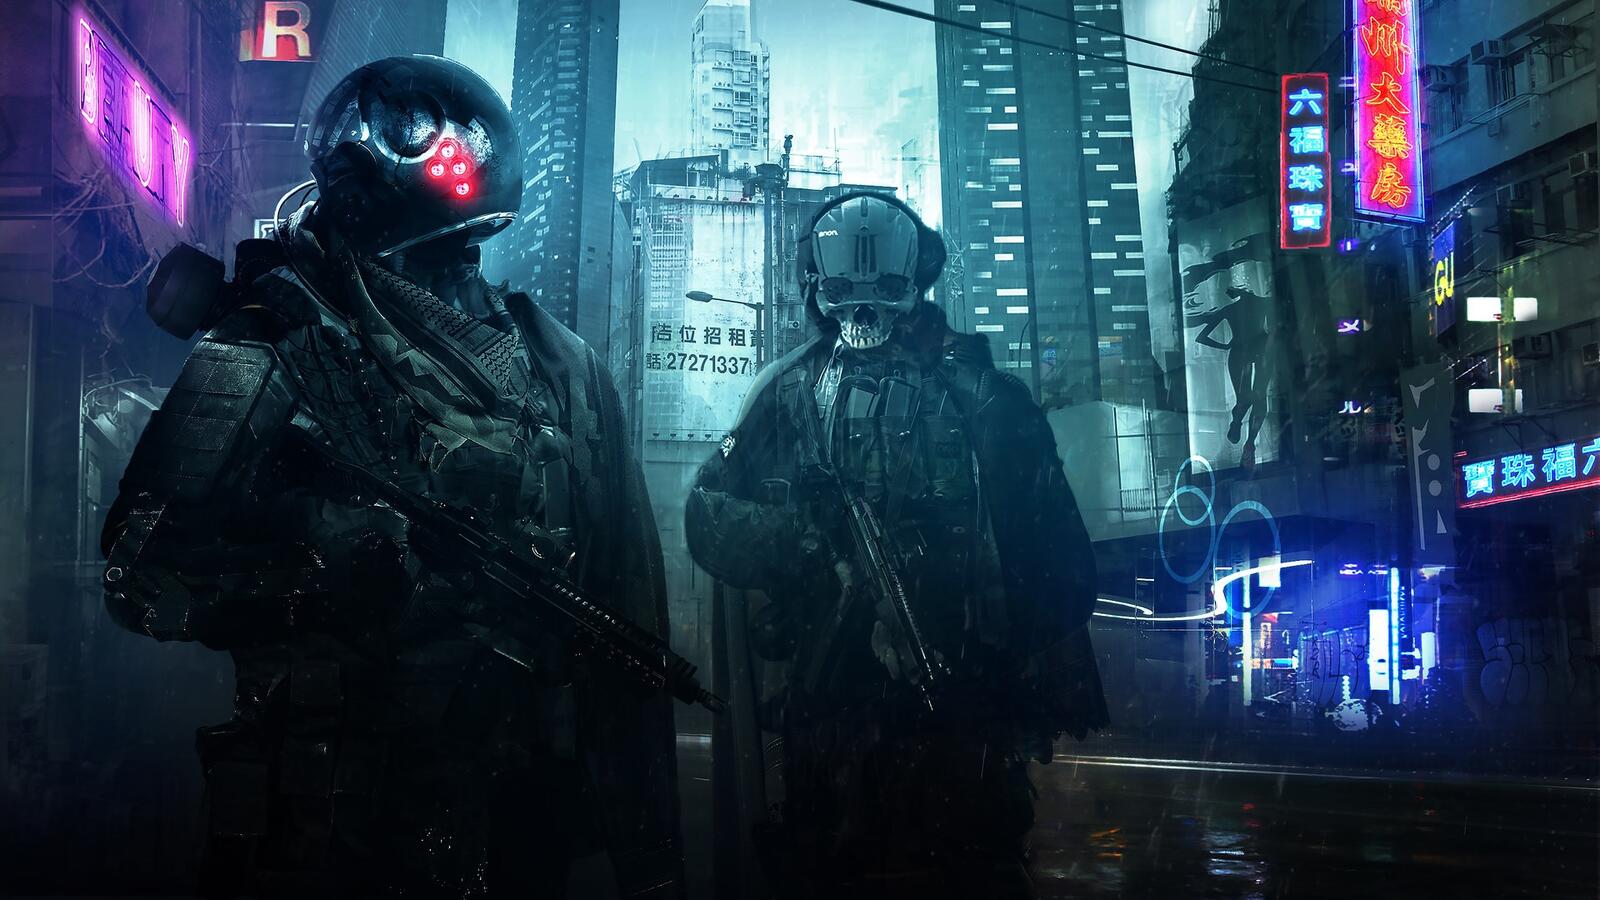 Wallpapers wallpaper futuristic cyberpunk city soldiers on the desktop